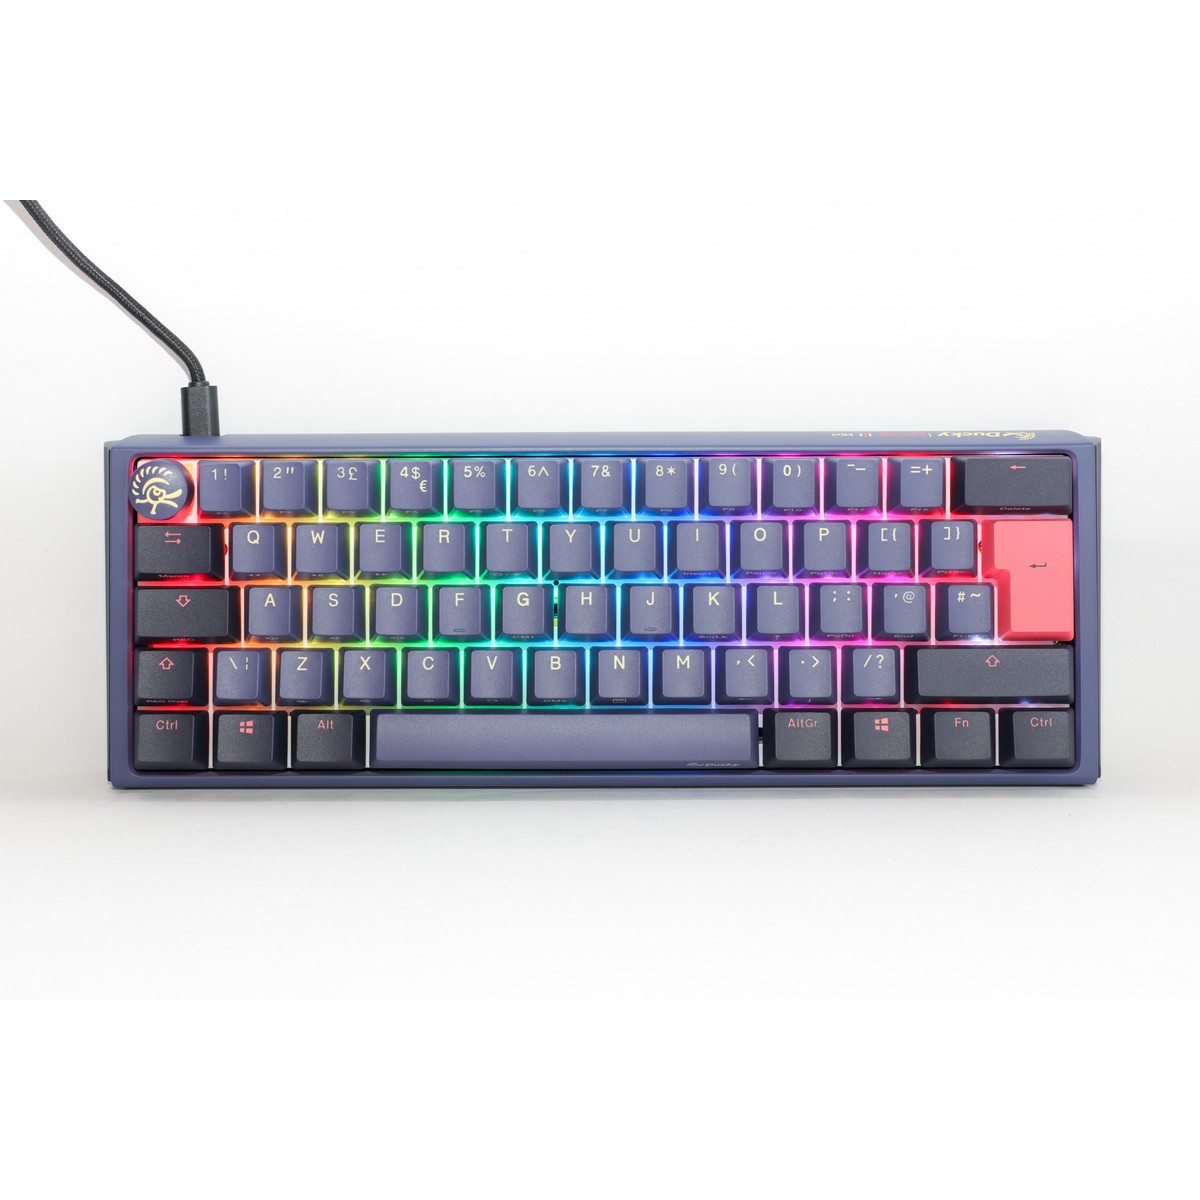 Ducky One 3 Cosmic Mini 60% USB RGB Mechanical Gaming Keyboard Cherry MX Red Switch - UK Layout